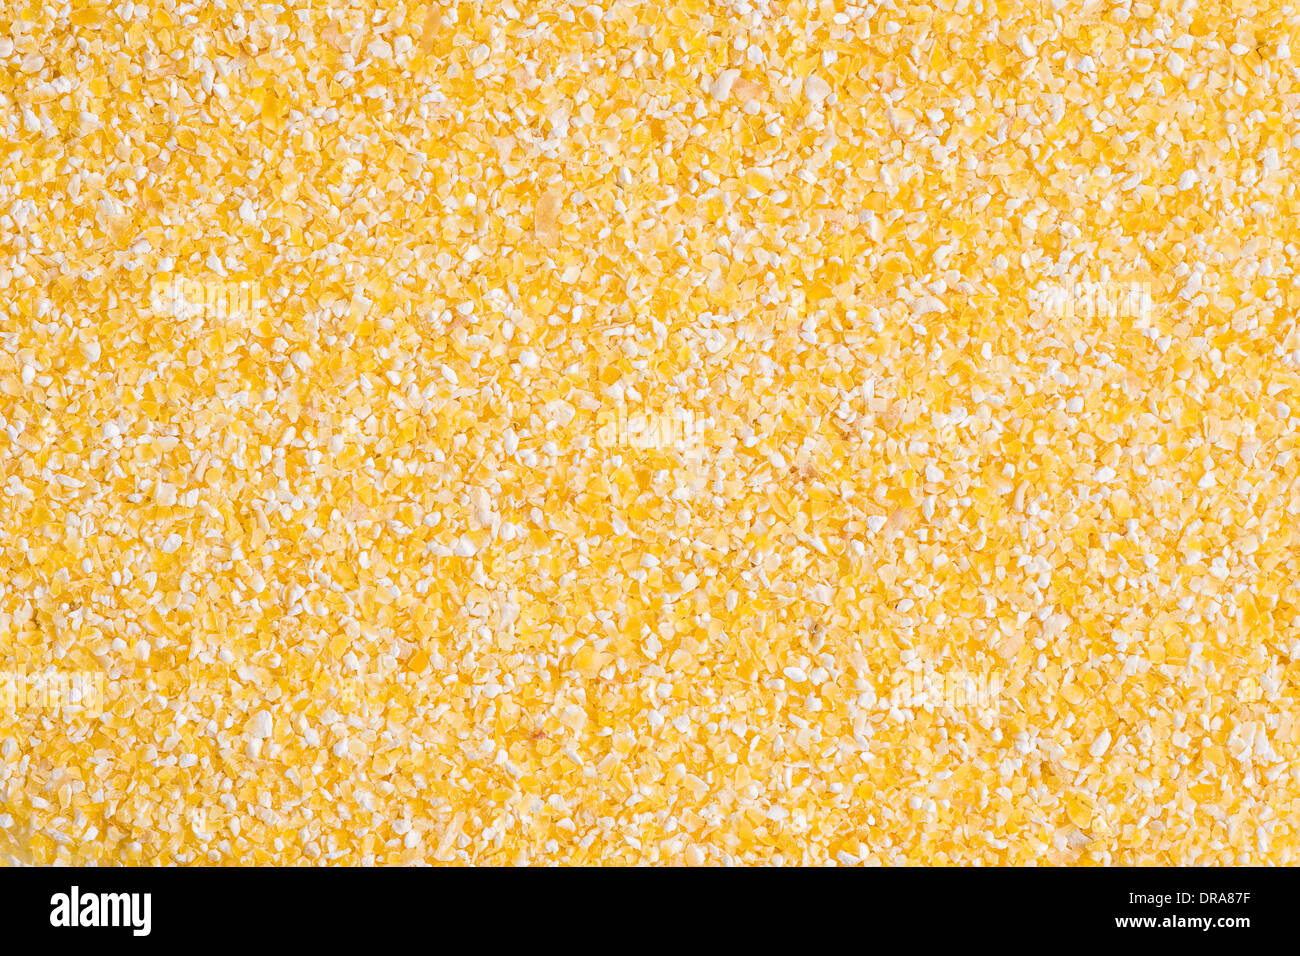 Corn grits background, hi-res closeup shot. Stock Photo